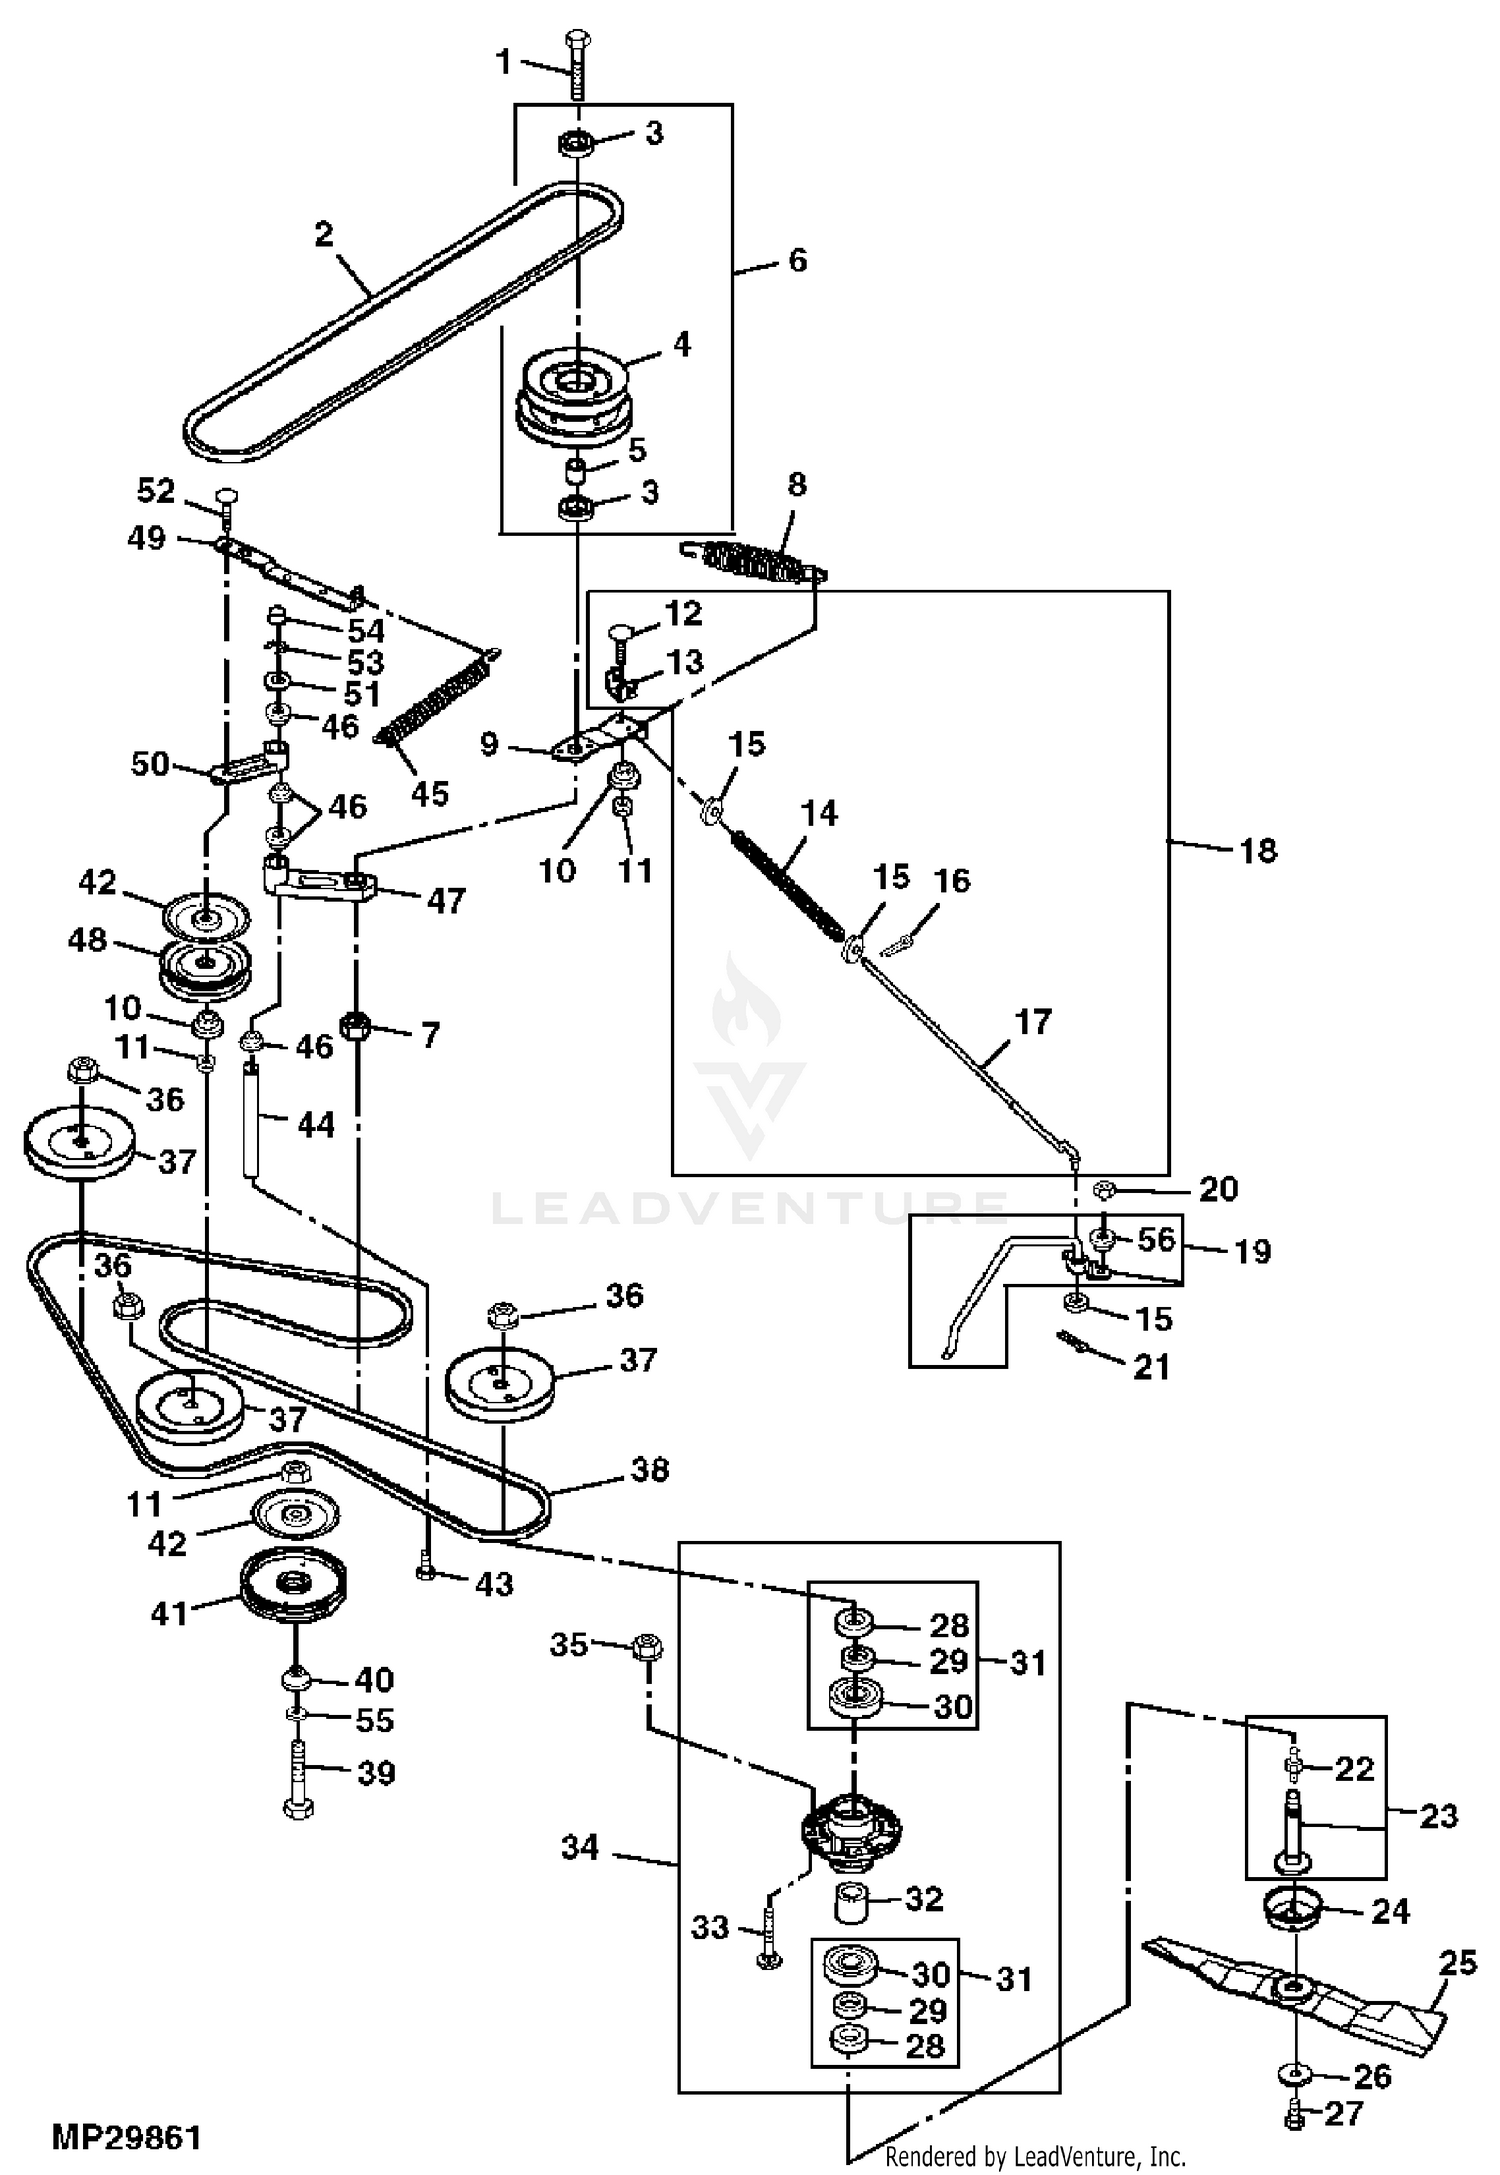 20 John Deere 48c Mower Deck Parts Diagram Wiring Diagram Niche